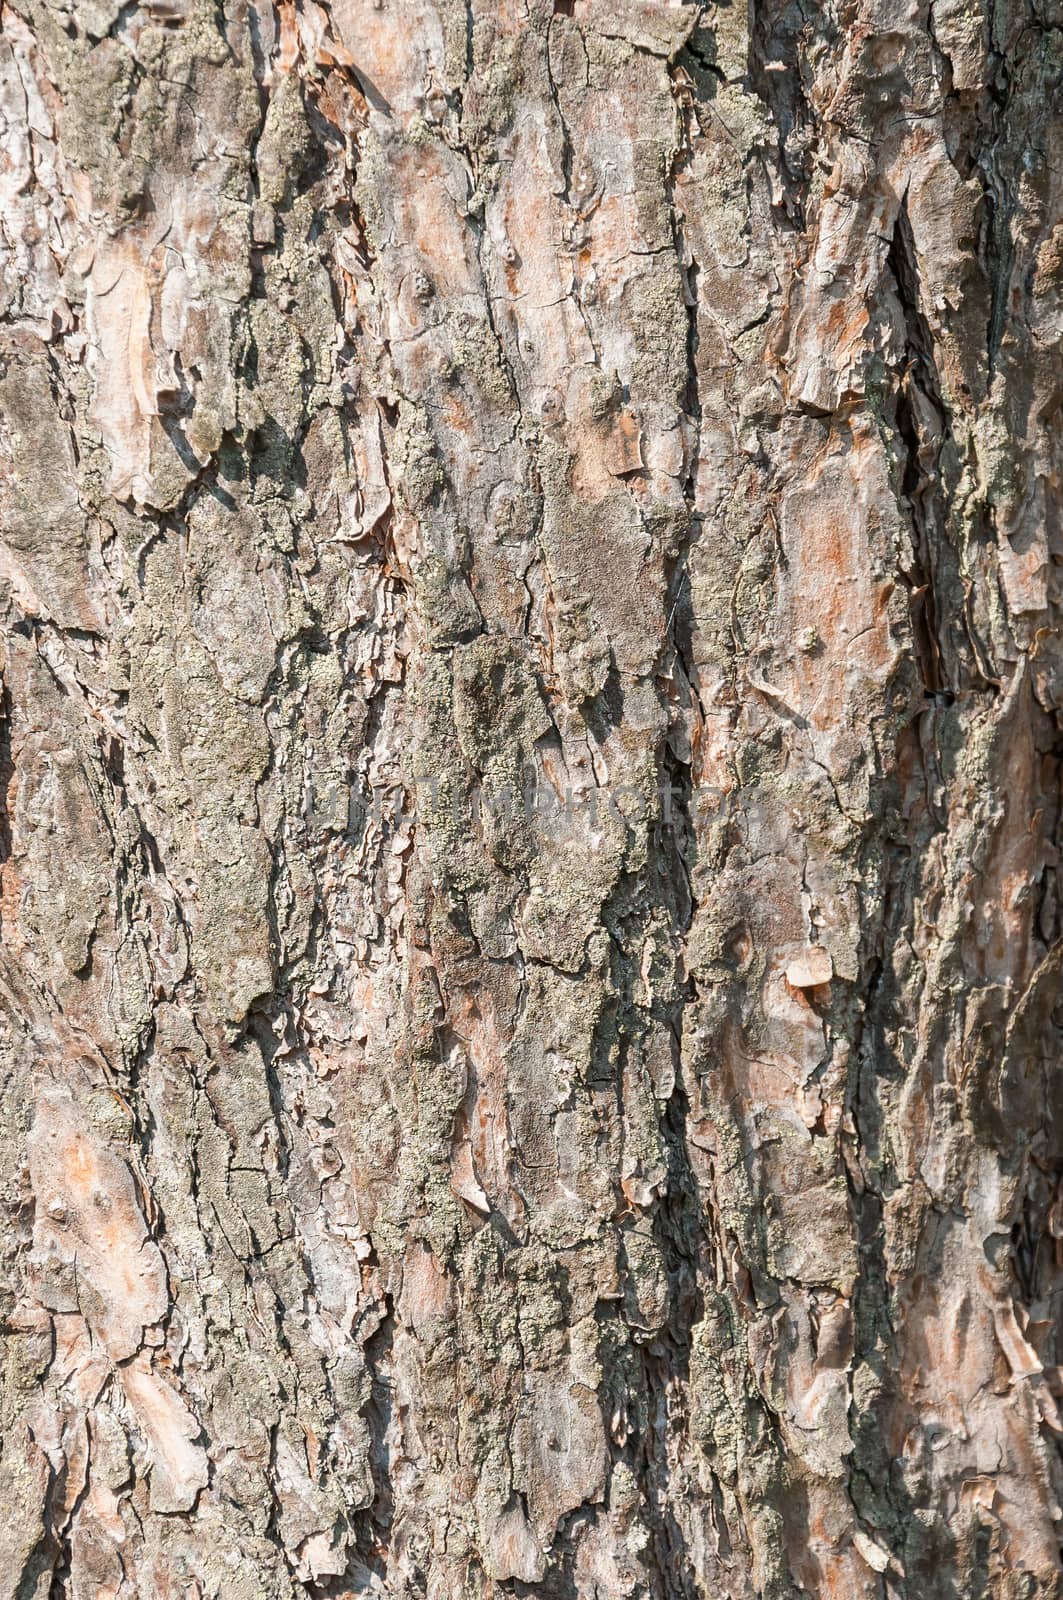 Tree bark texture by mkos83